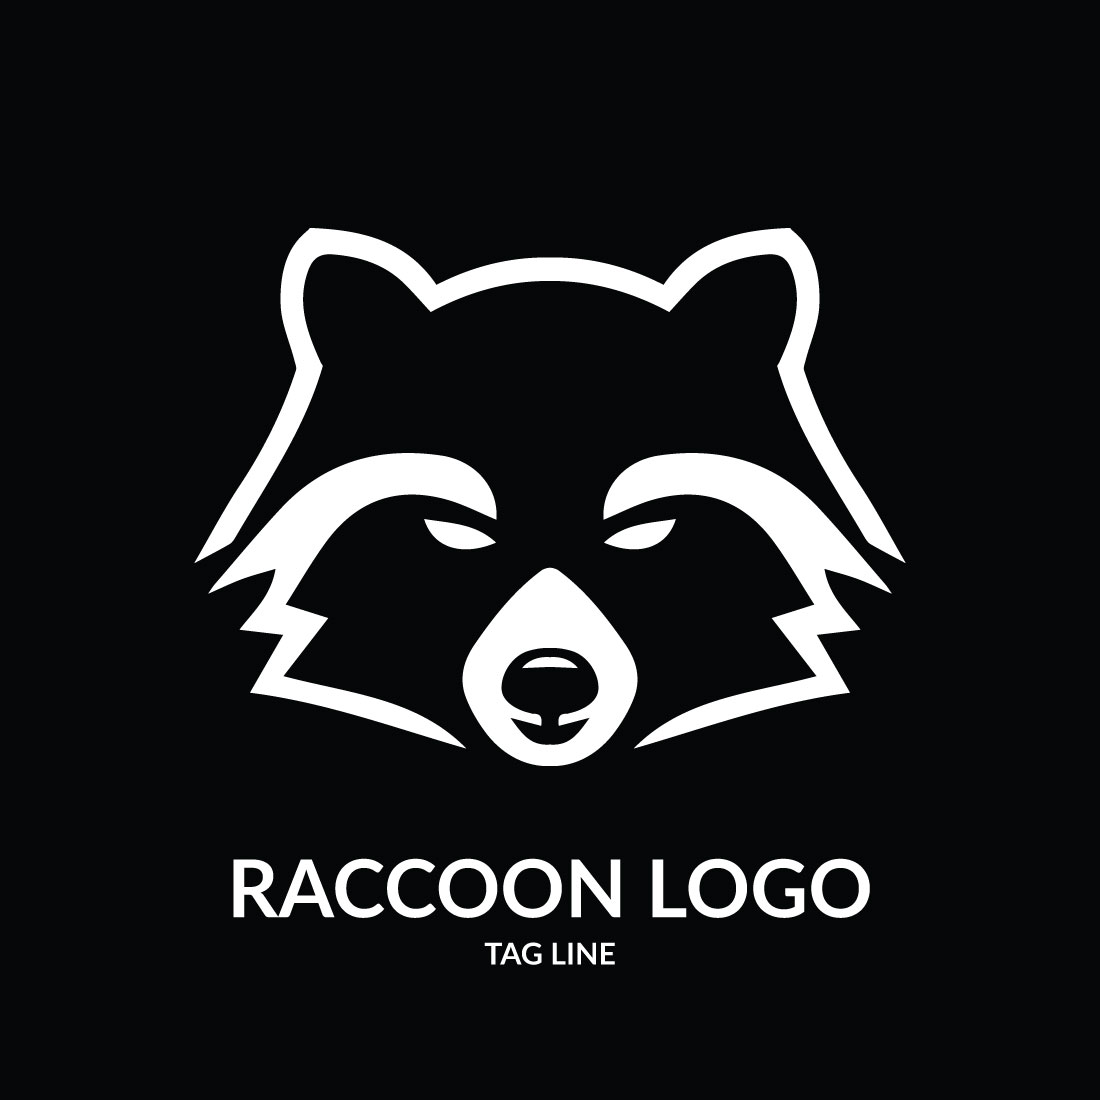 Raccoon Head Logo Template cover image.